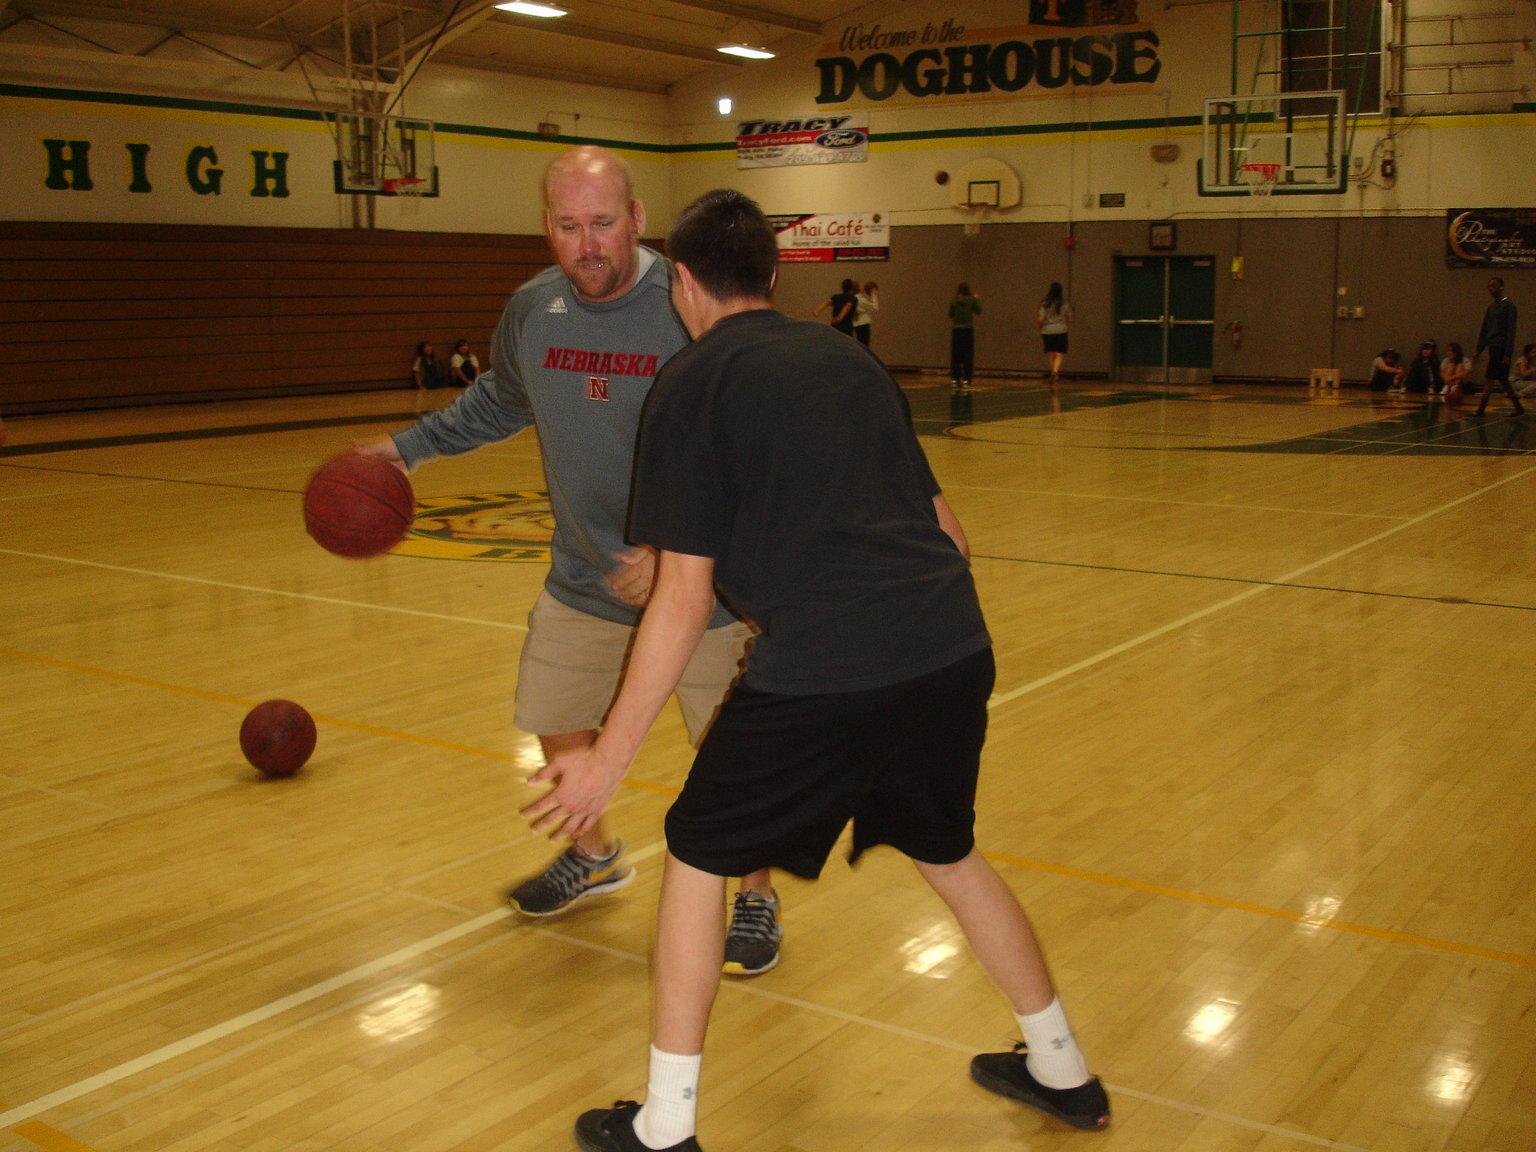 Physical Education teacher Matt Shrout challenging Logan Frigard in a basketball game.